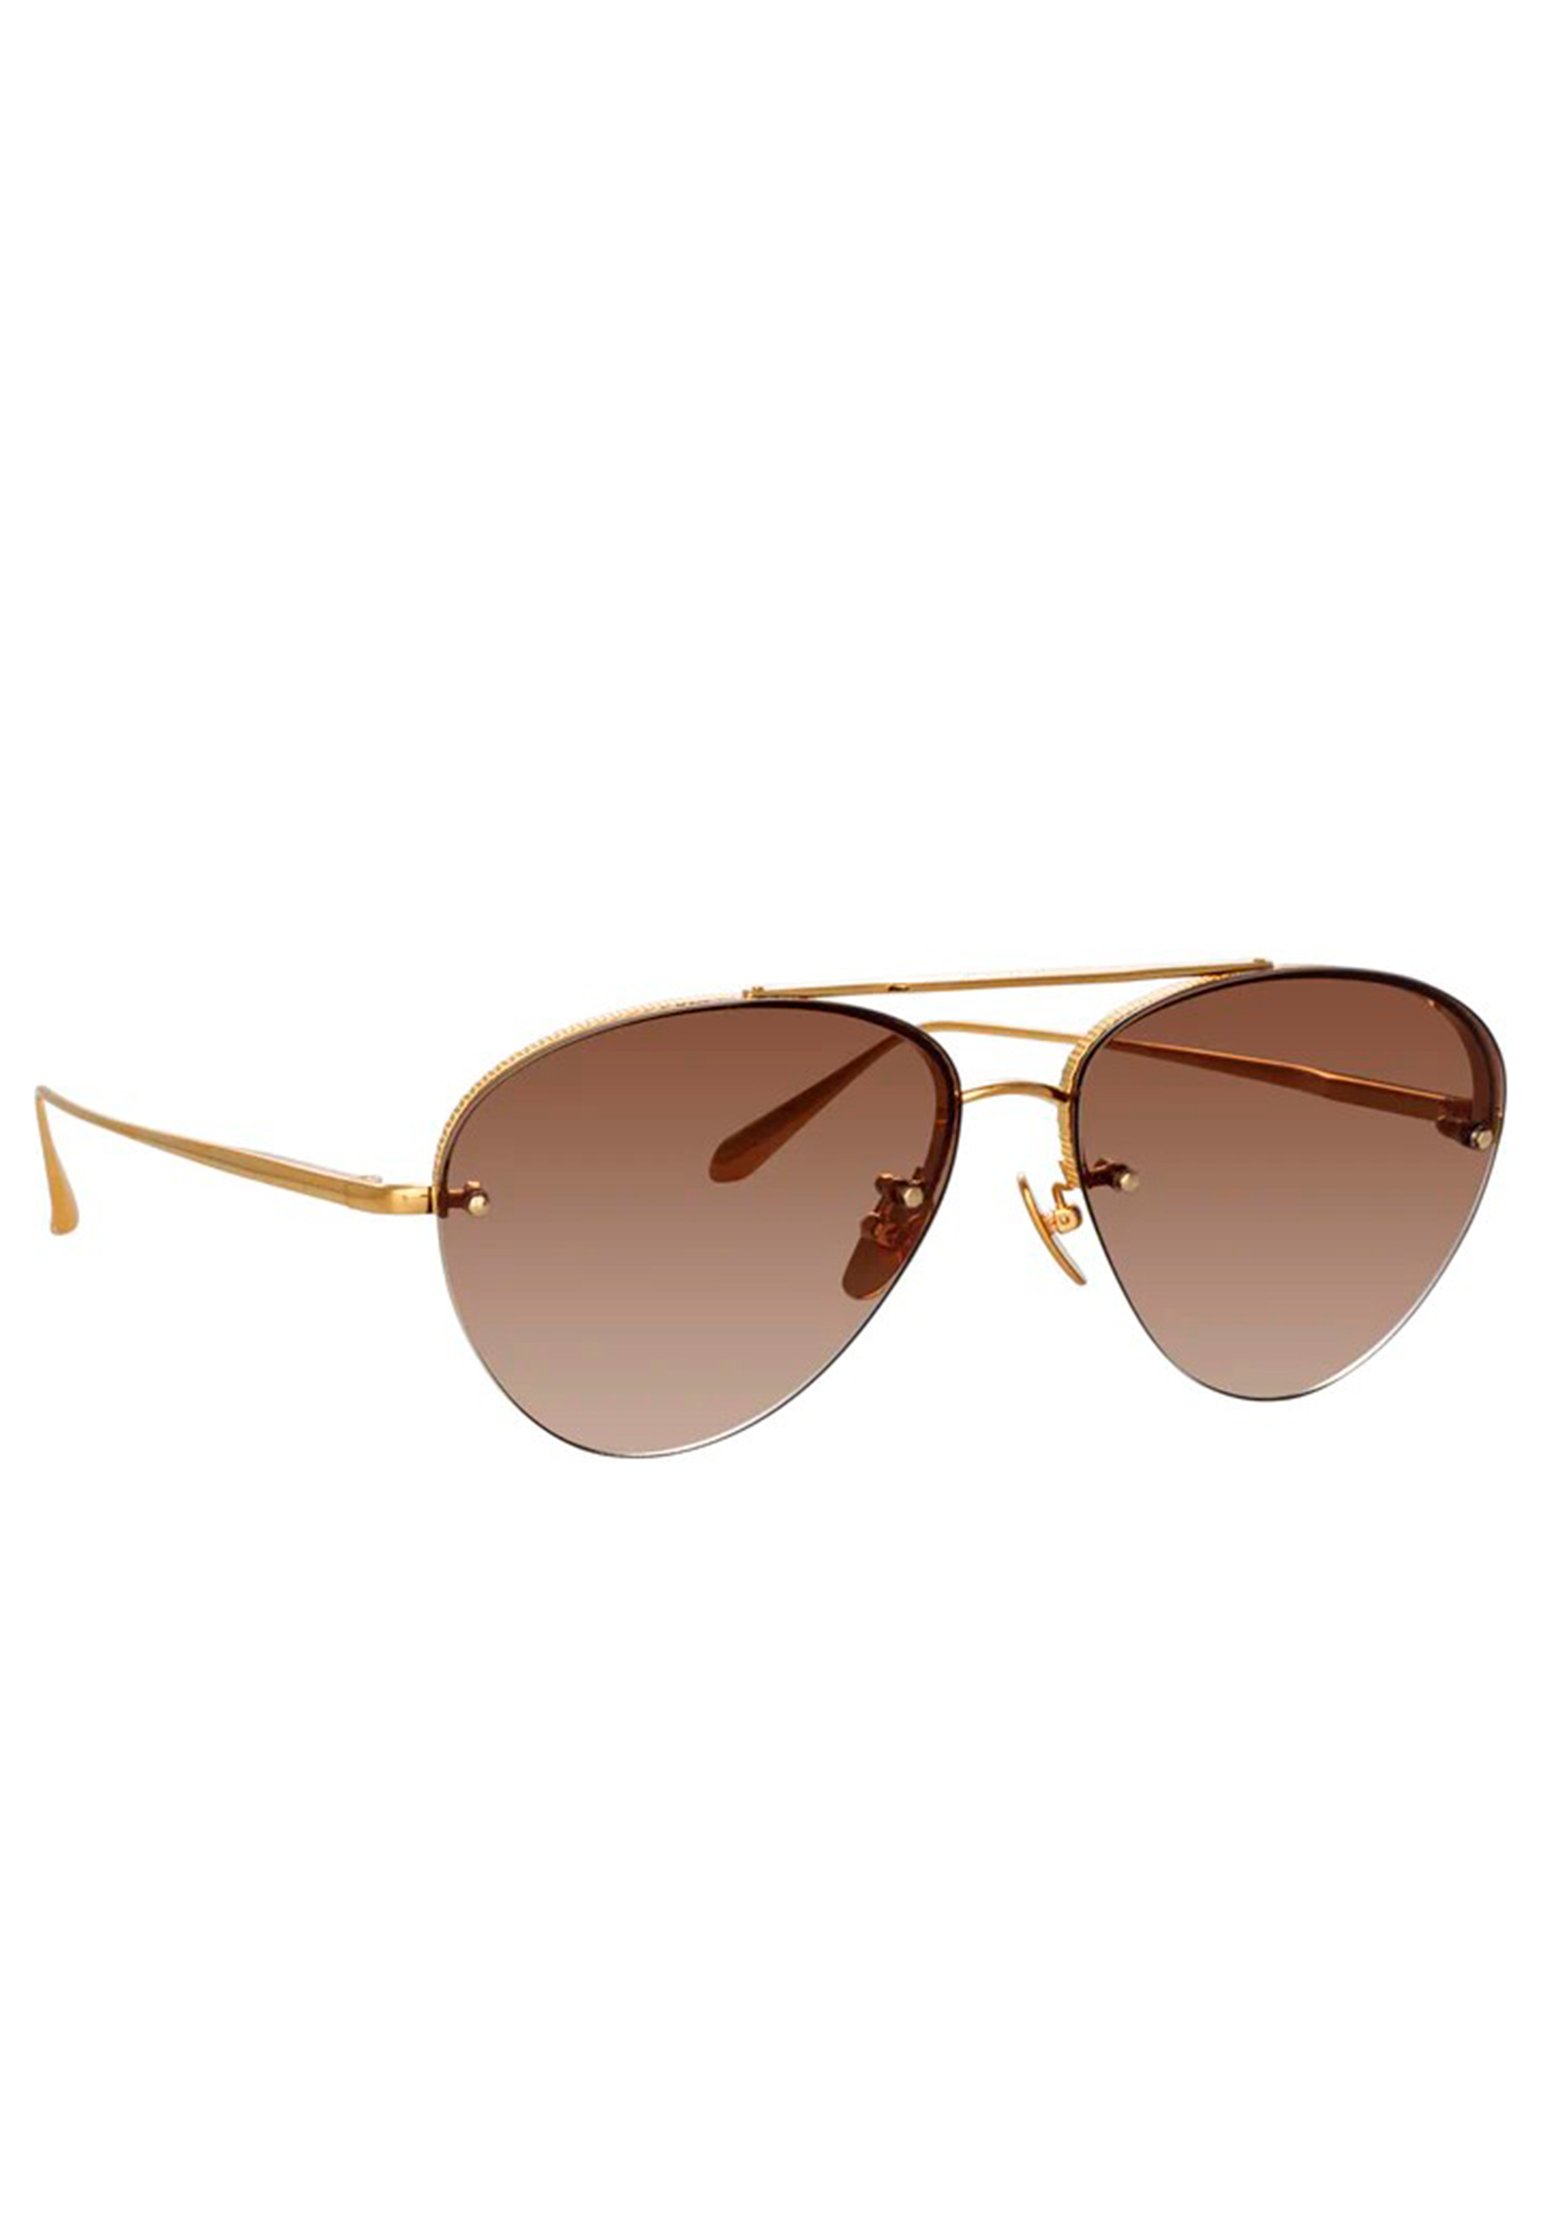 Sunglasses LINDA FARROW Color: gold (Code: 4027) in online store Allure